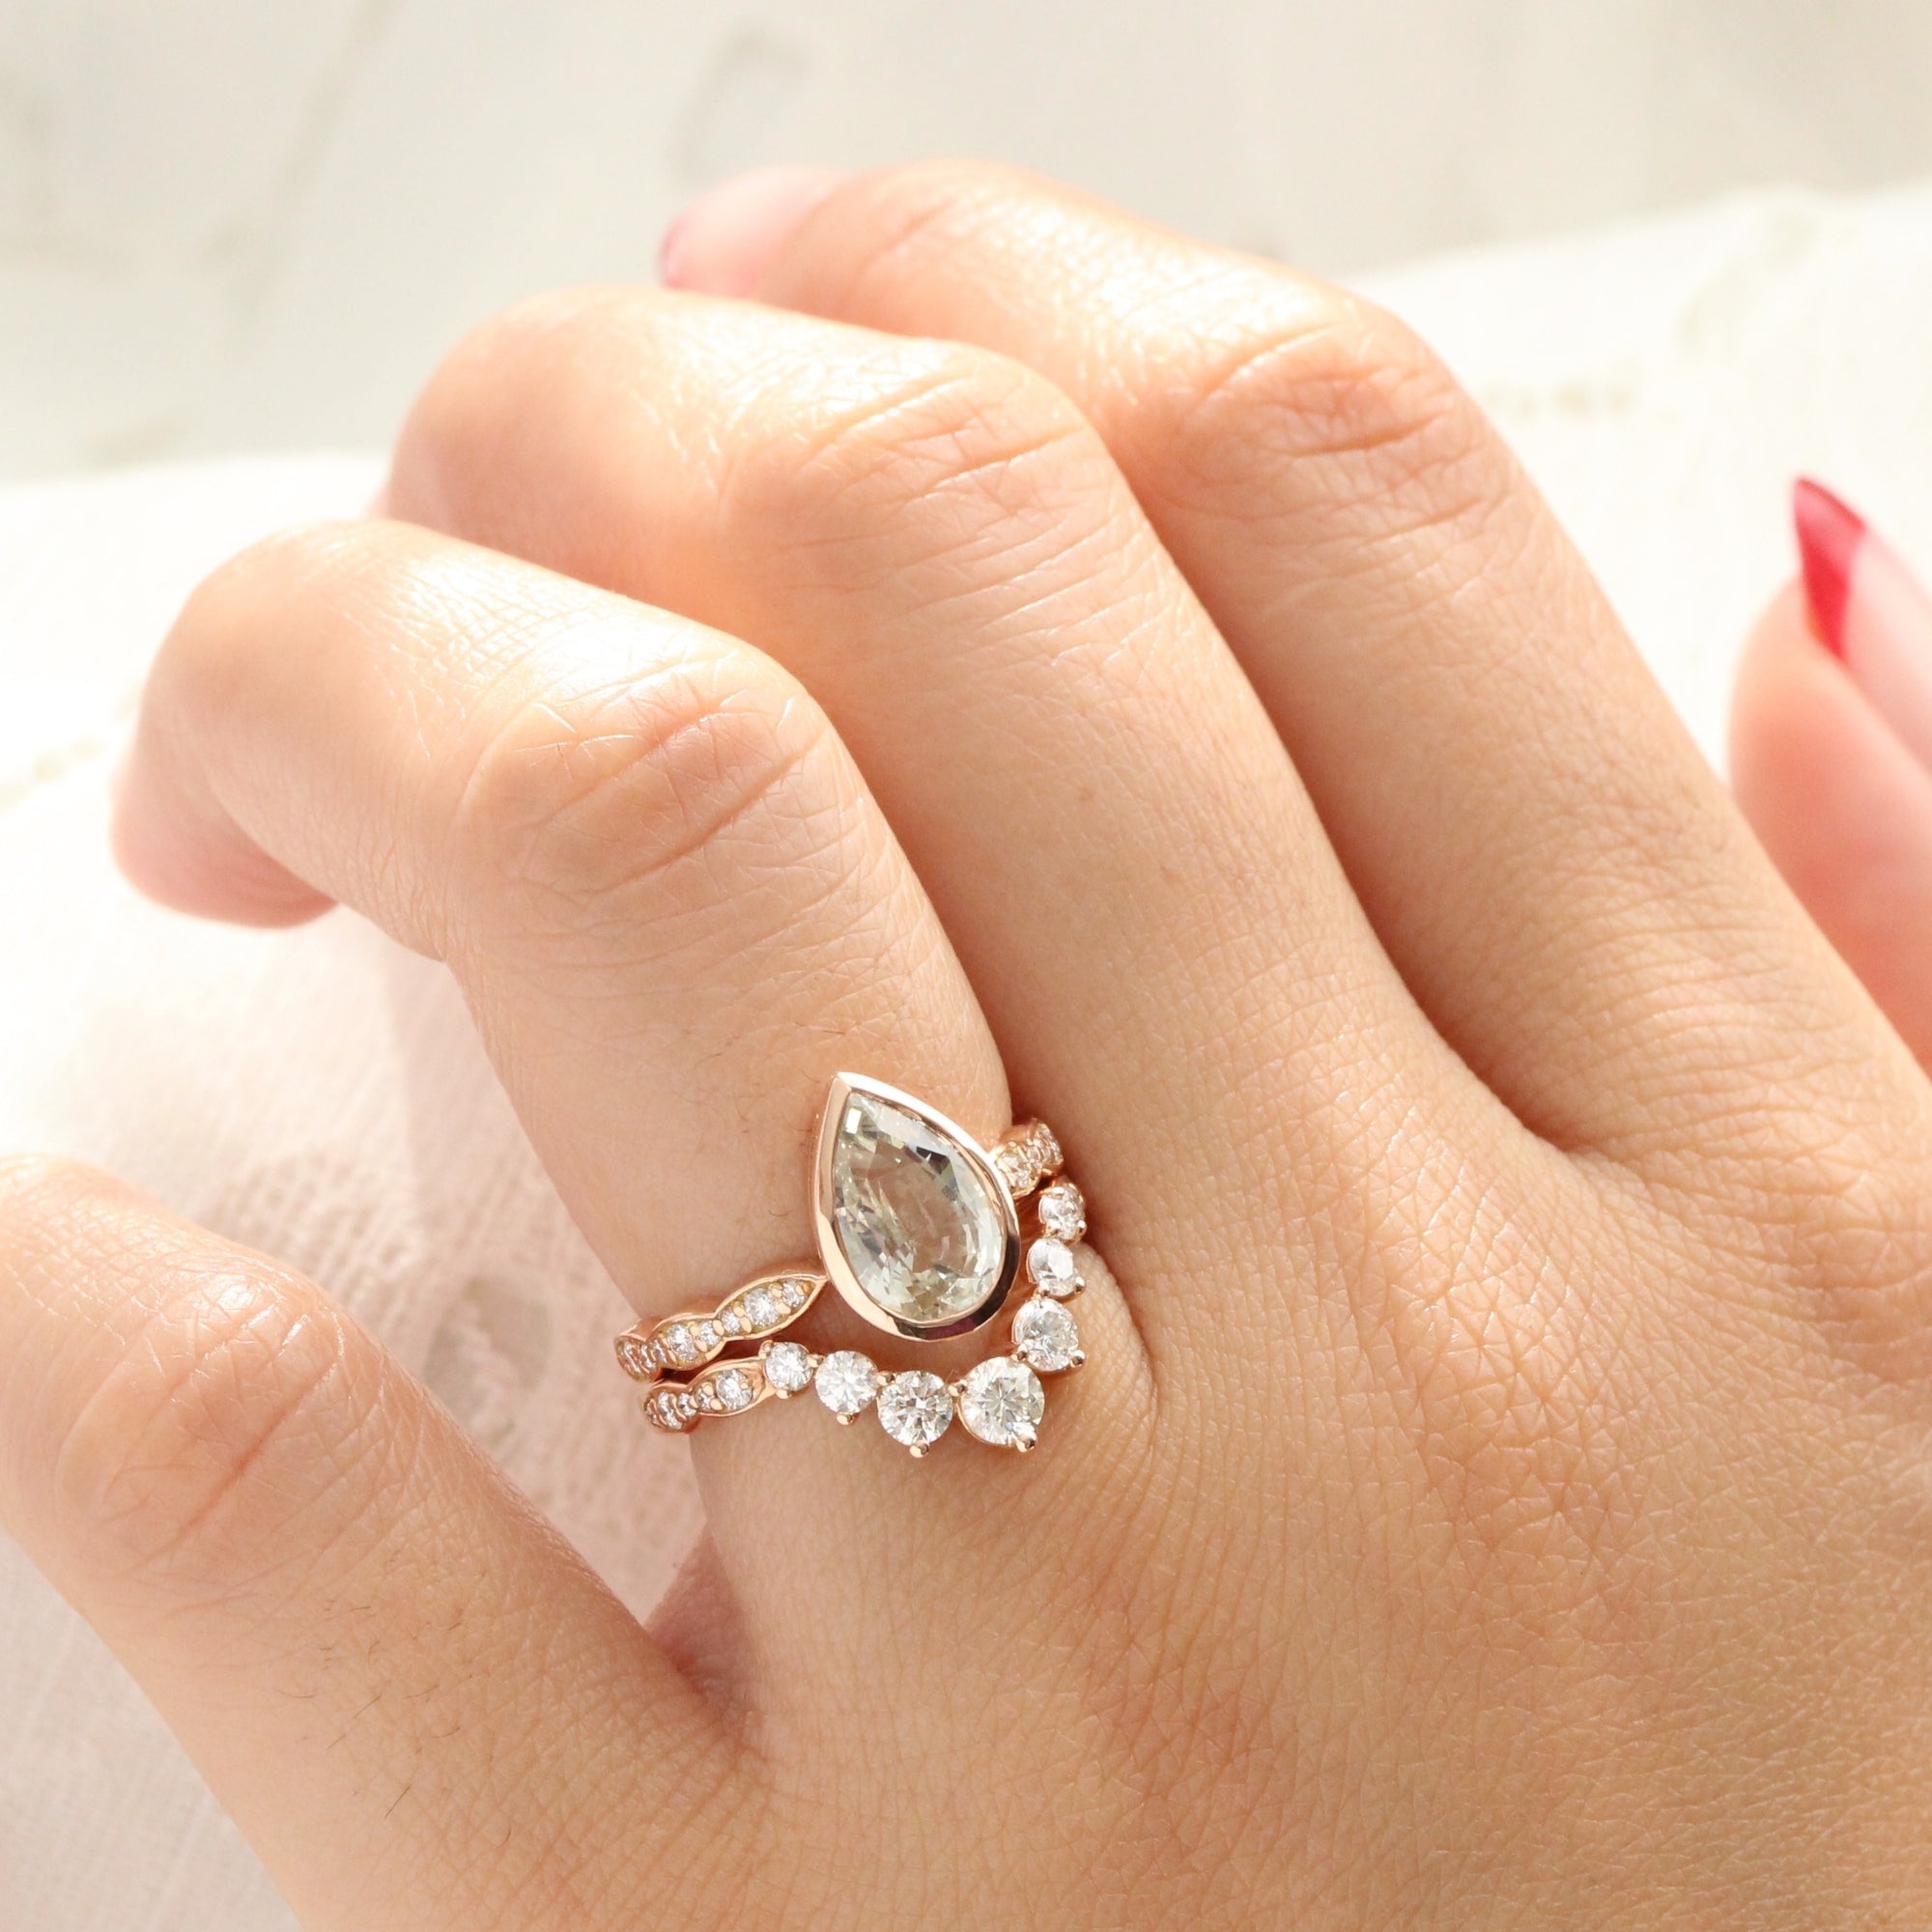 Pear seaform green sapphire ring rose gold bezel solitaire scalloped diamond band la more design jewelry